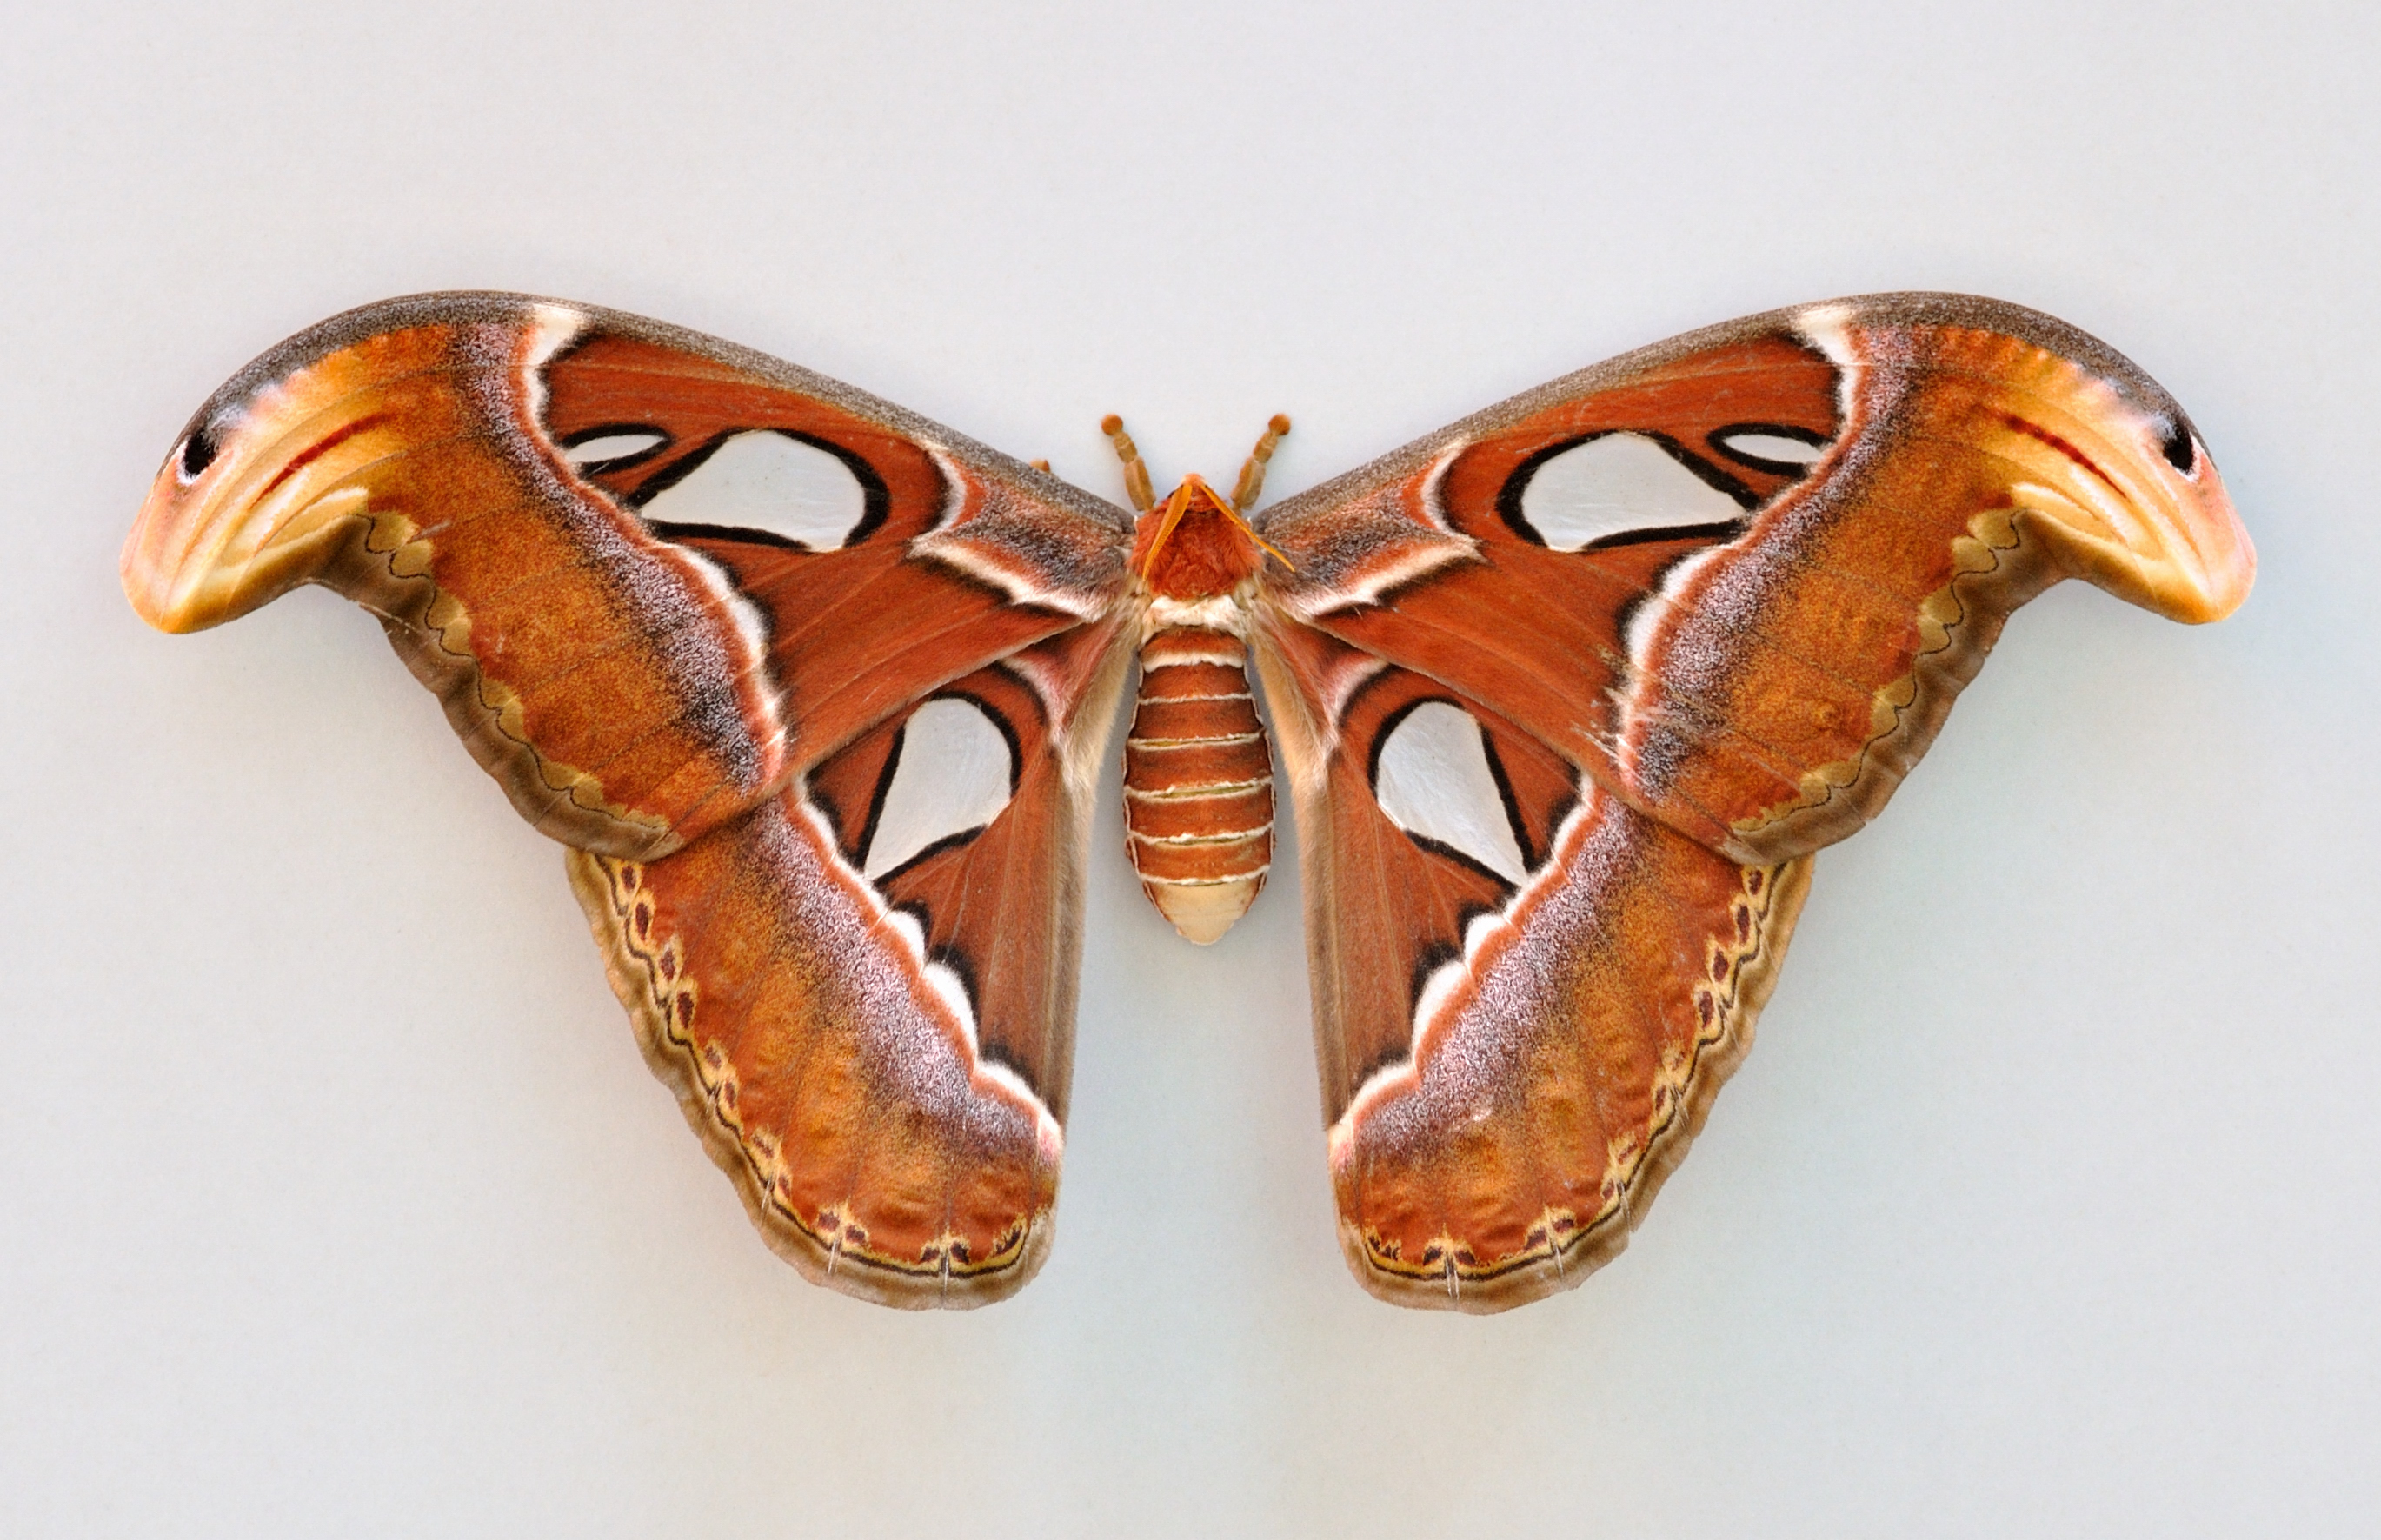 A close up shot of pink-shaded Atlas moth